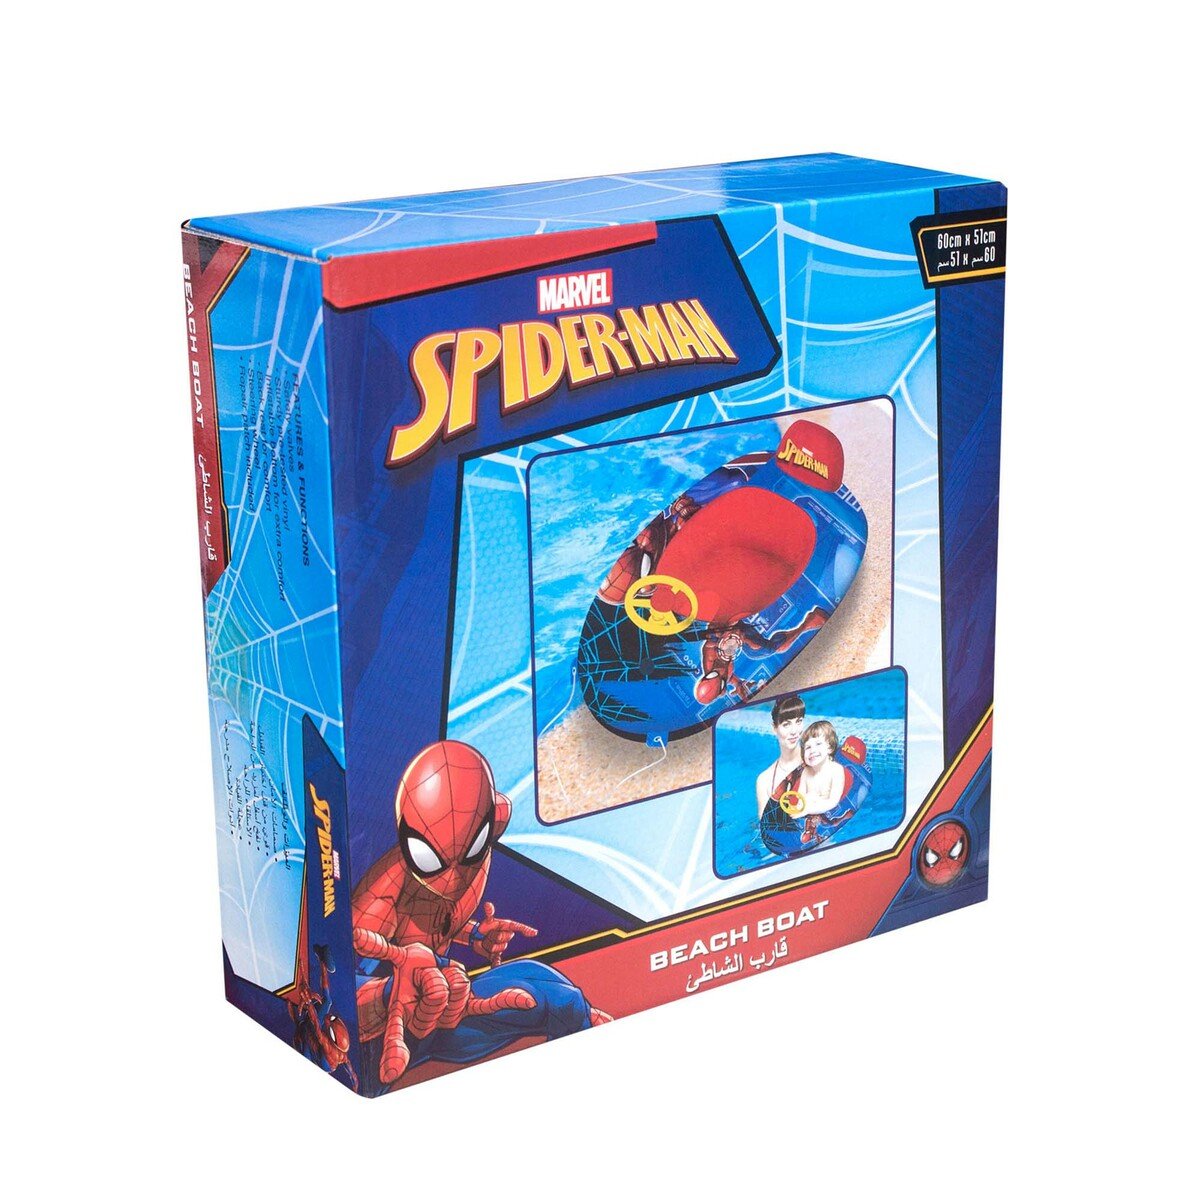 Spiderman Printed Kids Inflatable Swim Boat - Multi Color  TRHA6006